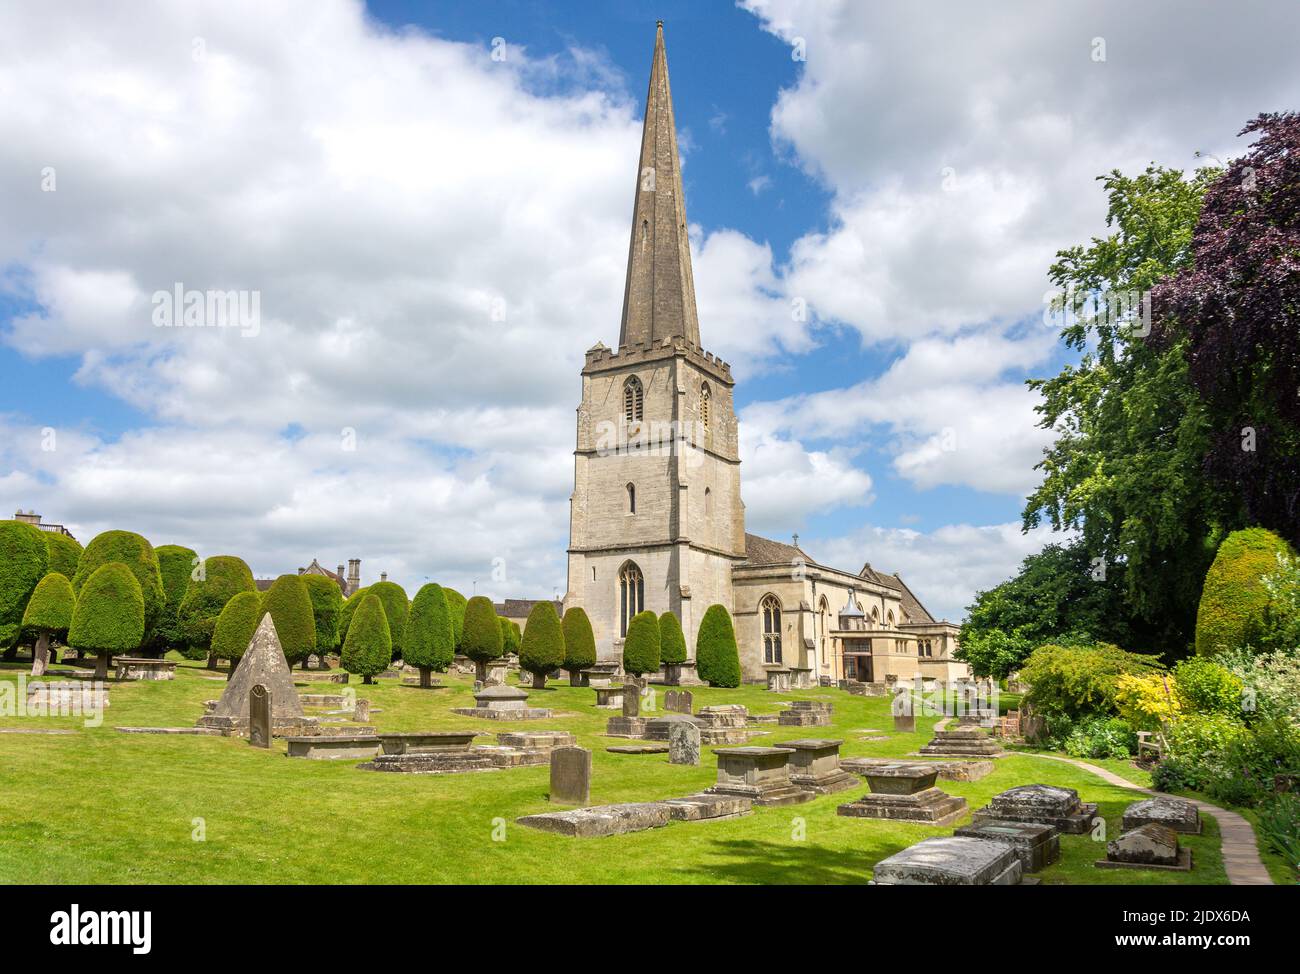 St Mary's Parish Church showing yew trees, New Street, Painswick, Gloucestershire, England, United Kingdom Stock Photo